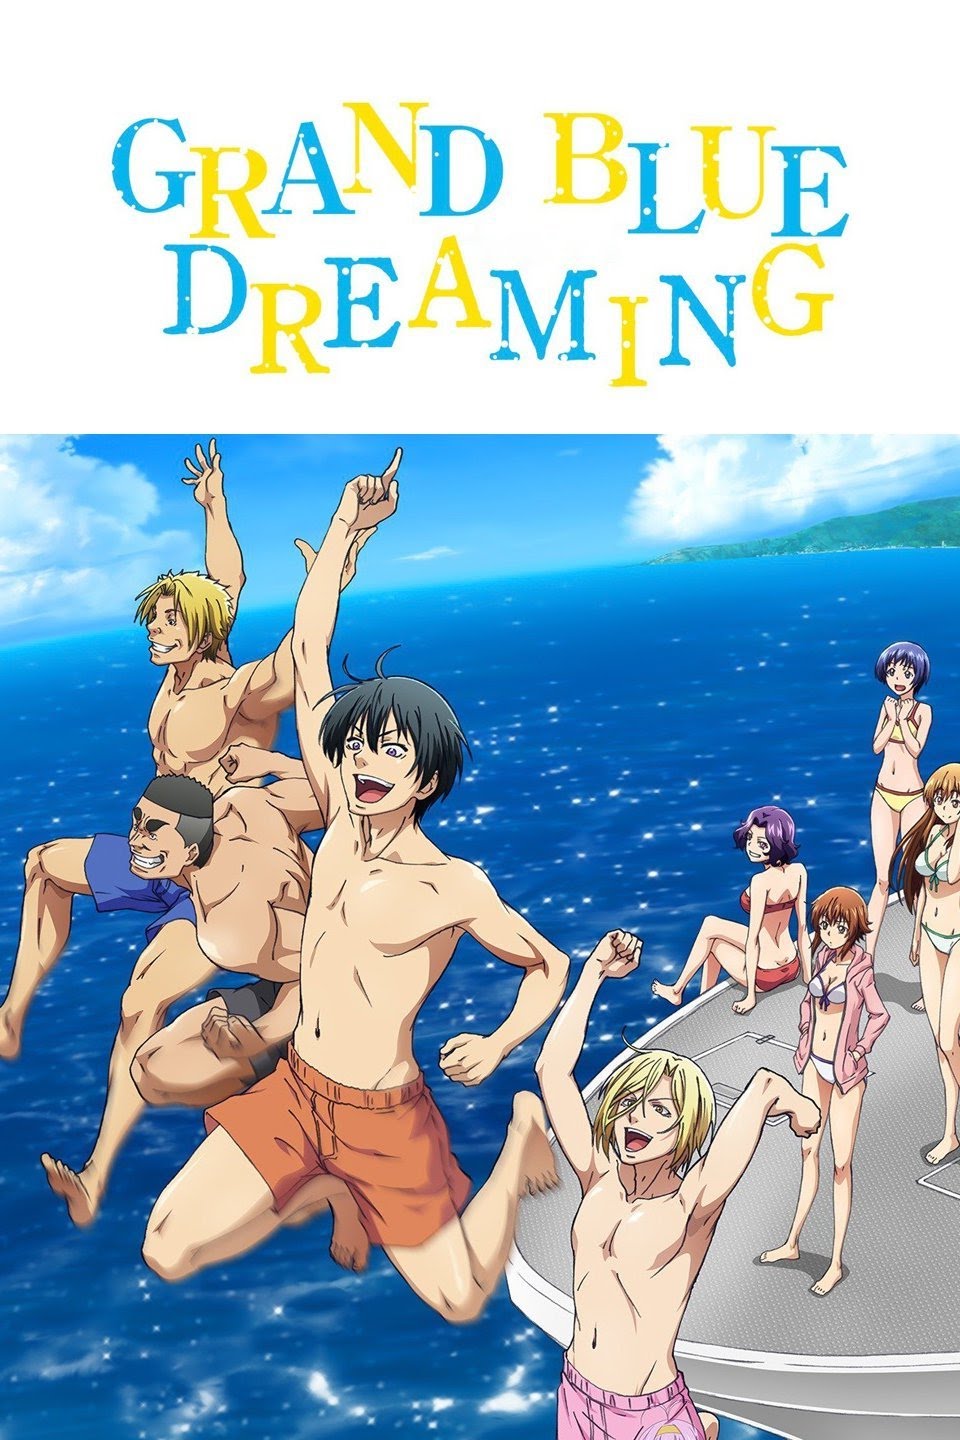 Qoo News] Scuba diving manga Grand Blue gets TV anime this Summer